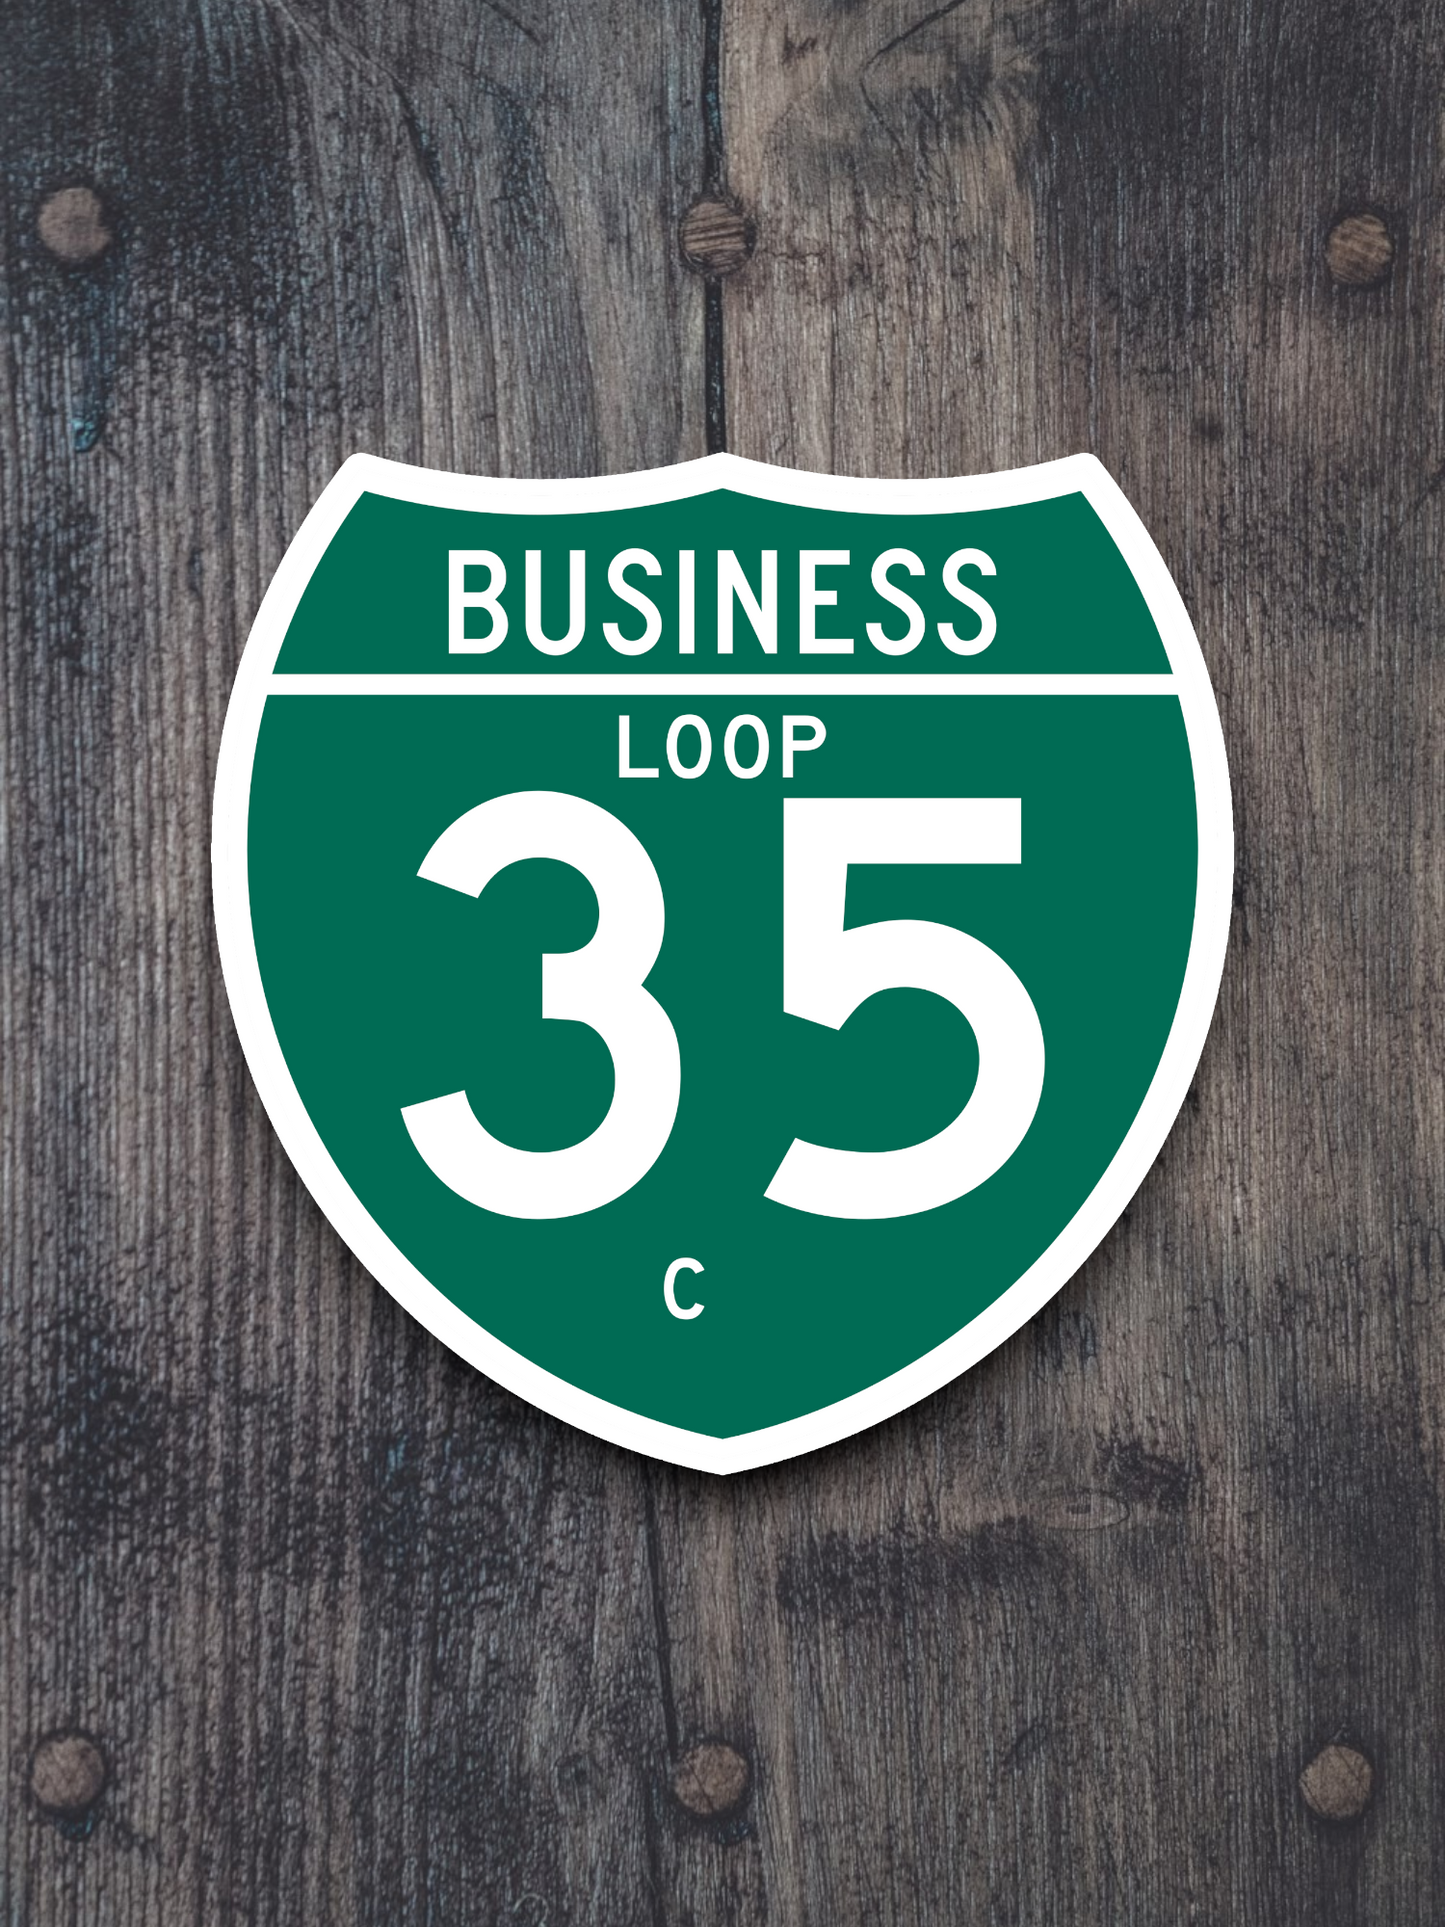 Business Spur Interstate 35-C Texas Road Sign Sticker